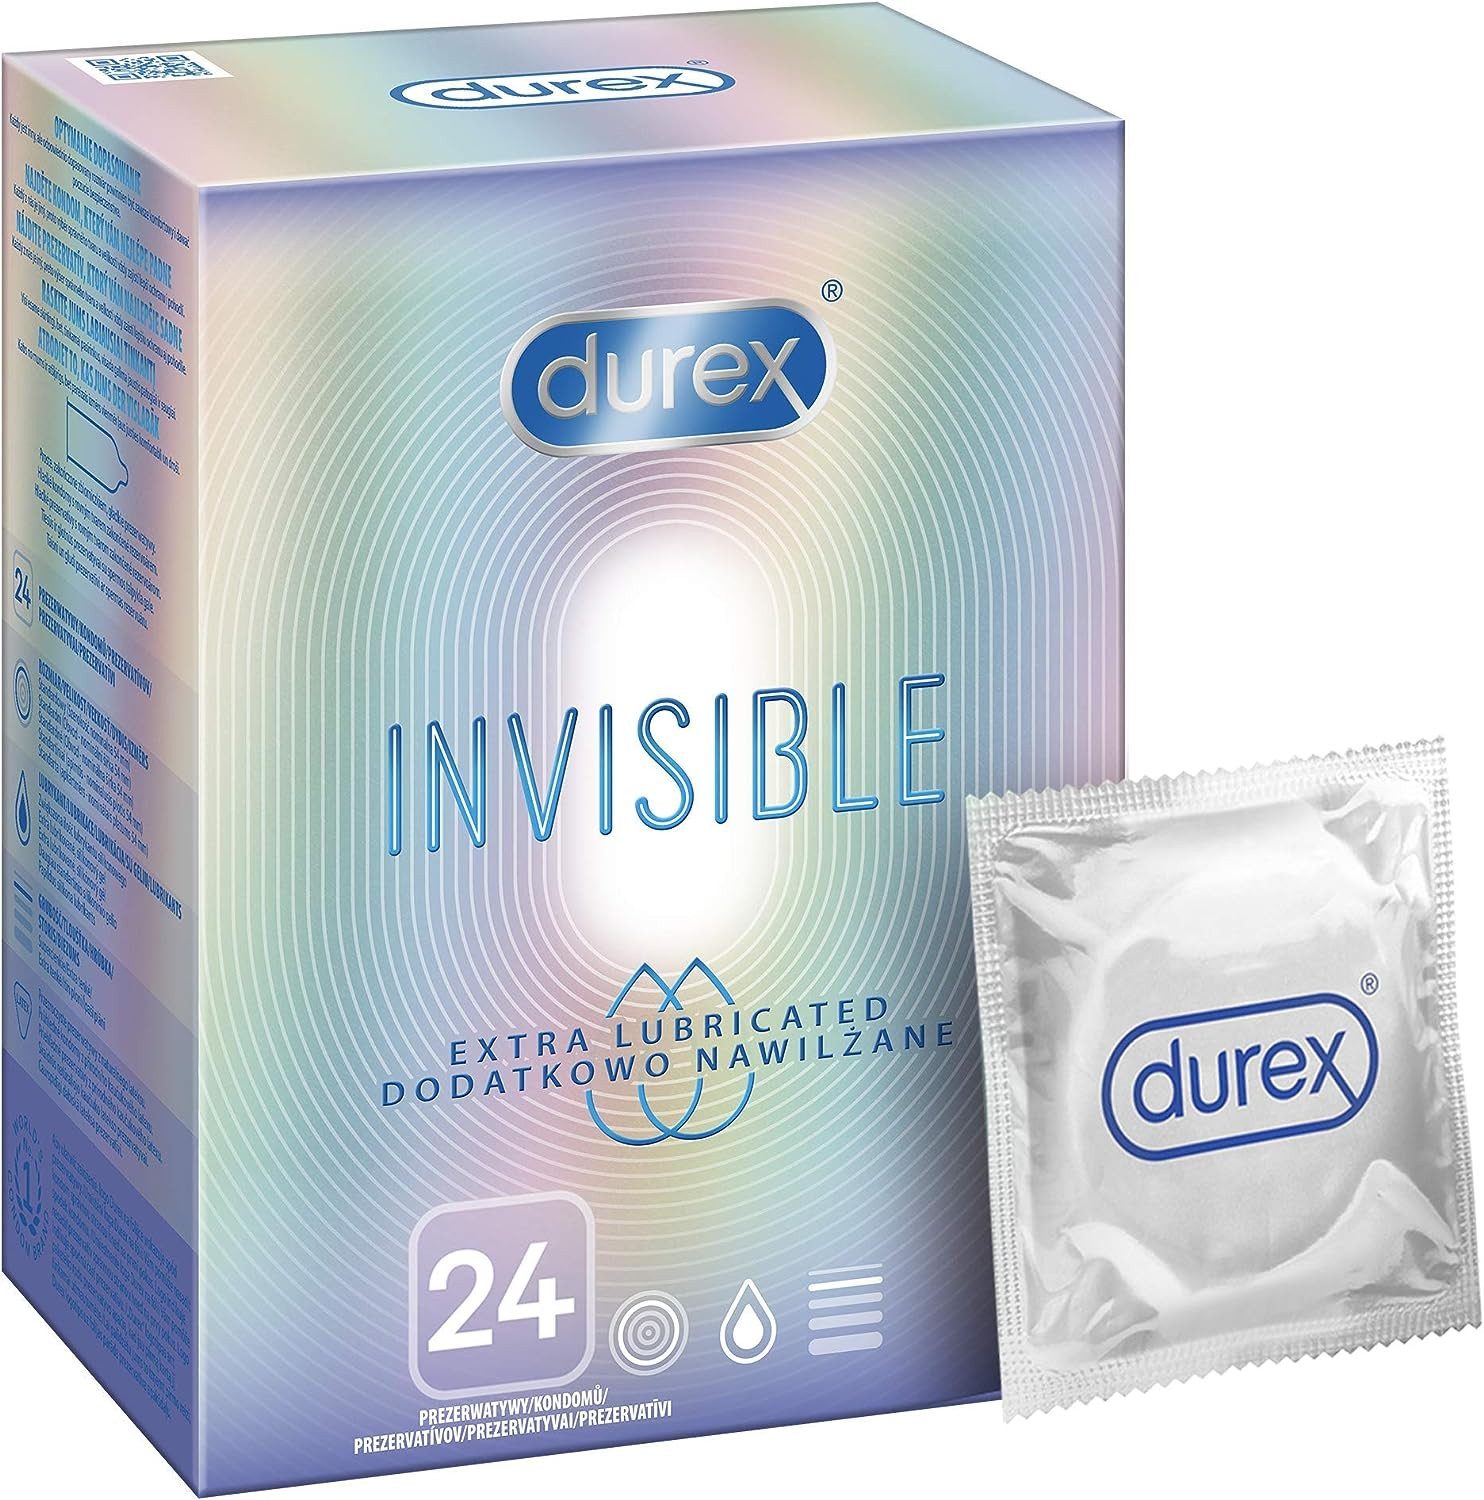 durex Kondome Invisible, 24 St., extra dünn, aus Silikon